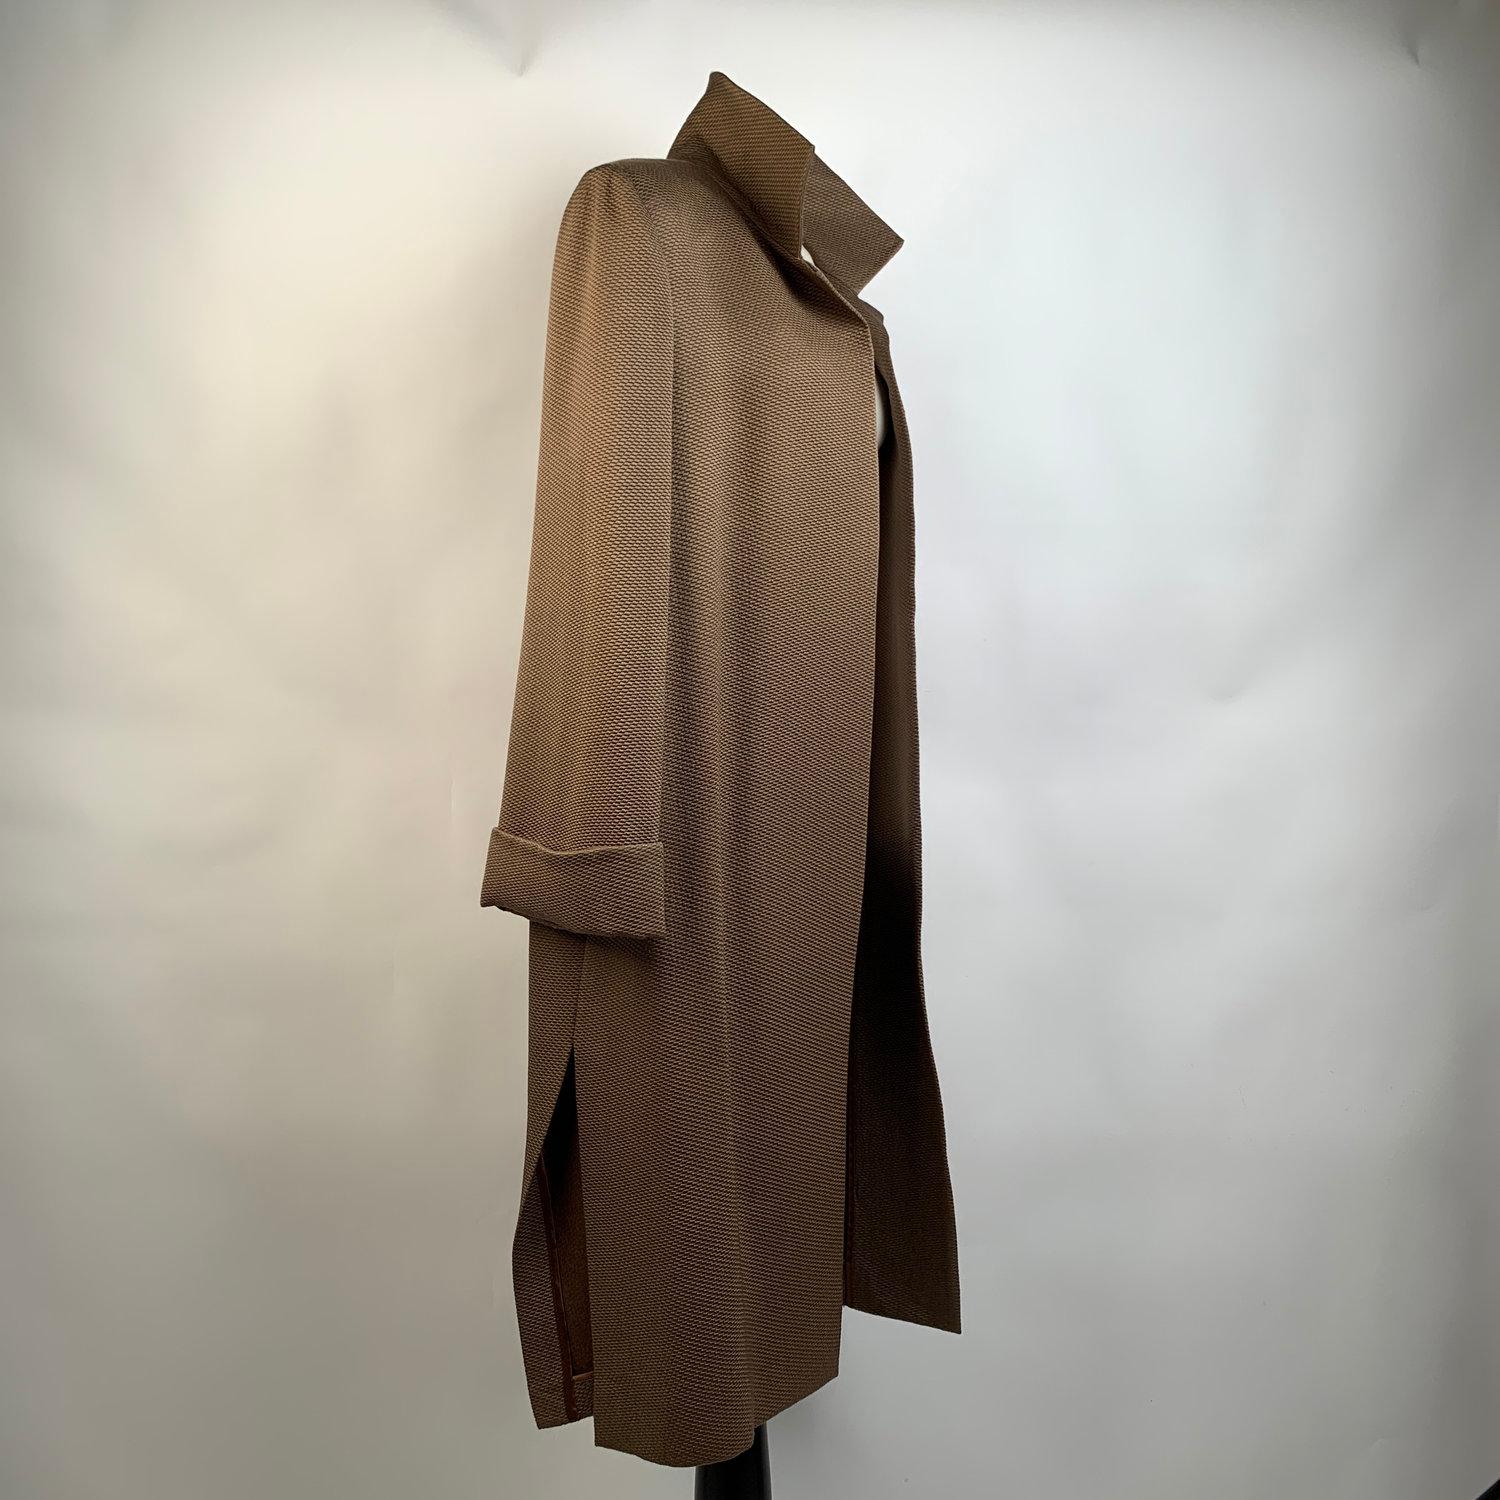 Galitzine Couture Vintage Light Brown Dustcoat Open Front Coat 2